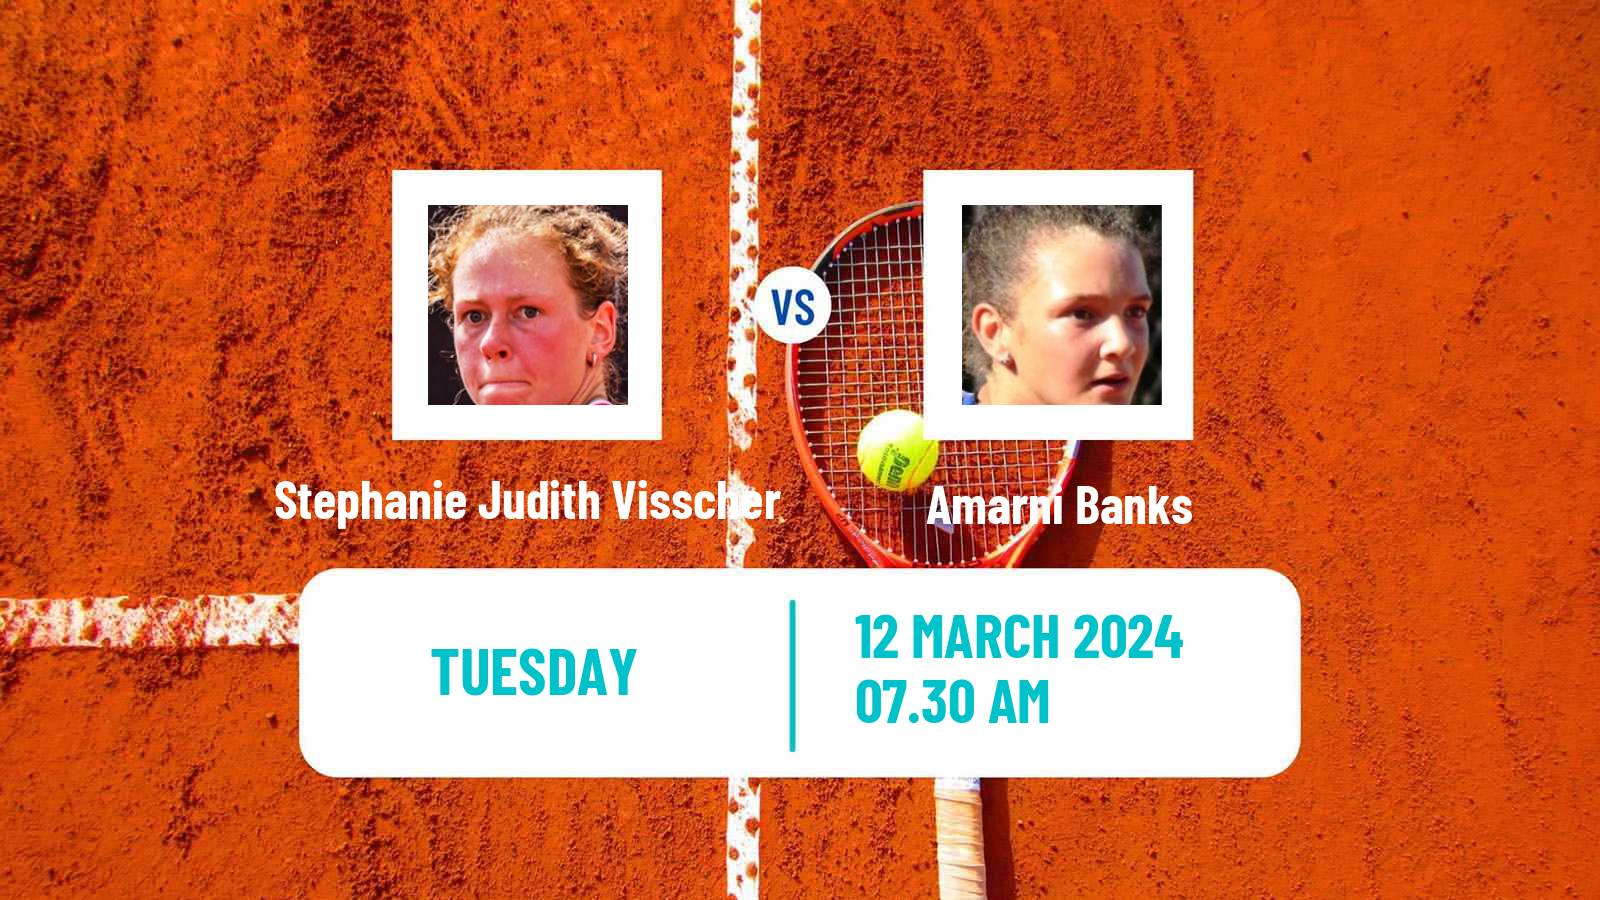 Tennis ITF W35 Solarino 2 Women Stephanie Judith Visscher - Amarni Banks